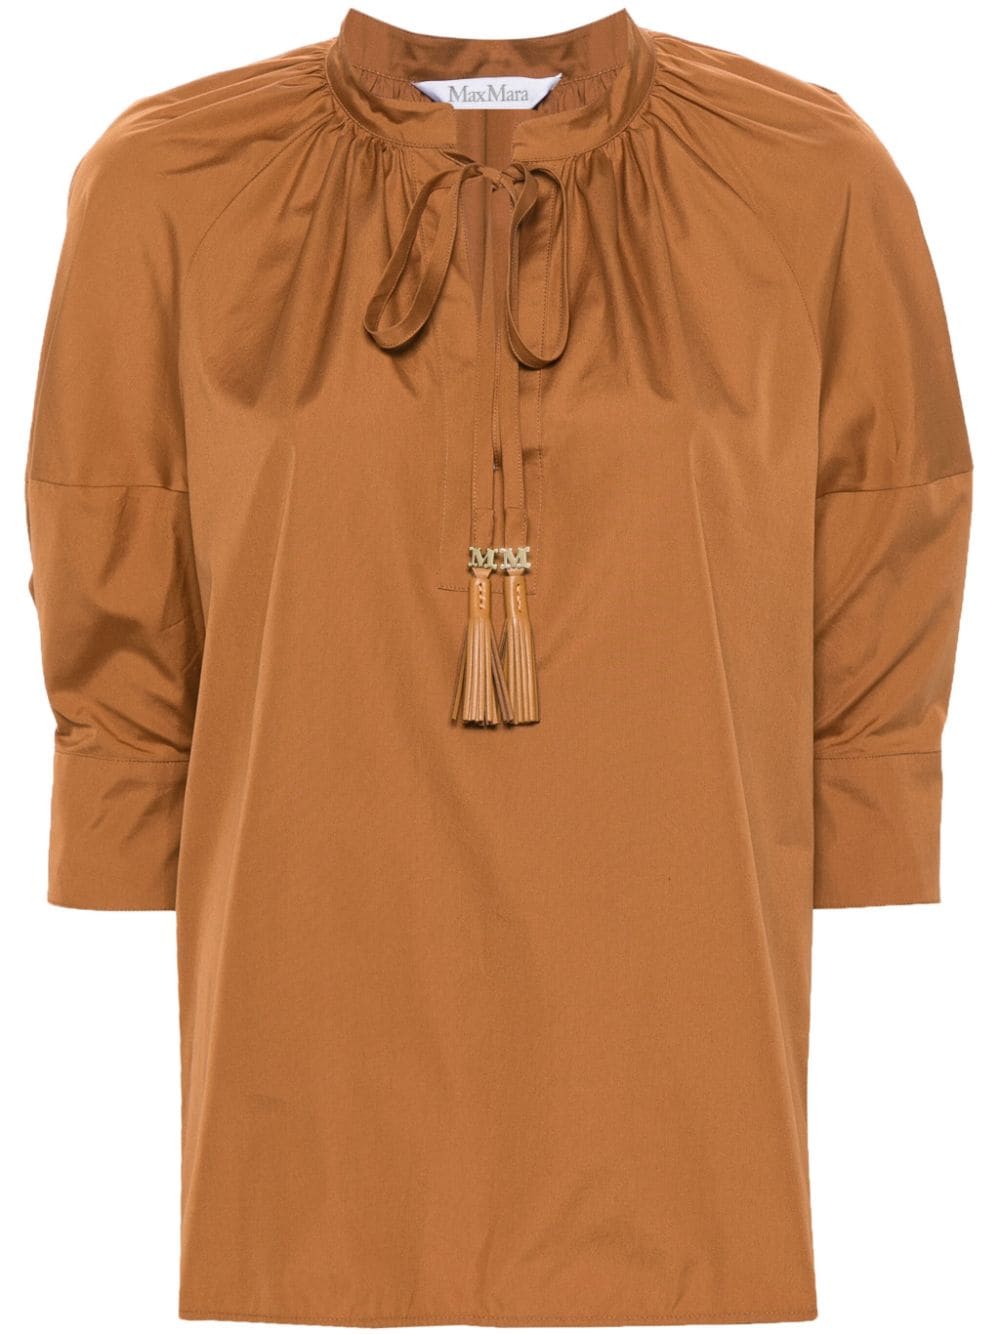 Tassel-detail cotton blouse<BR/><BR/><BR/>